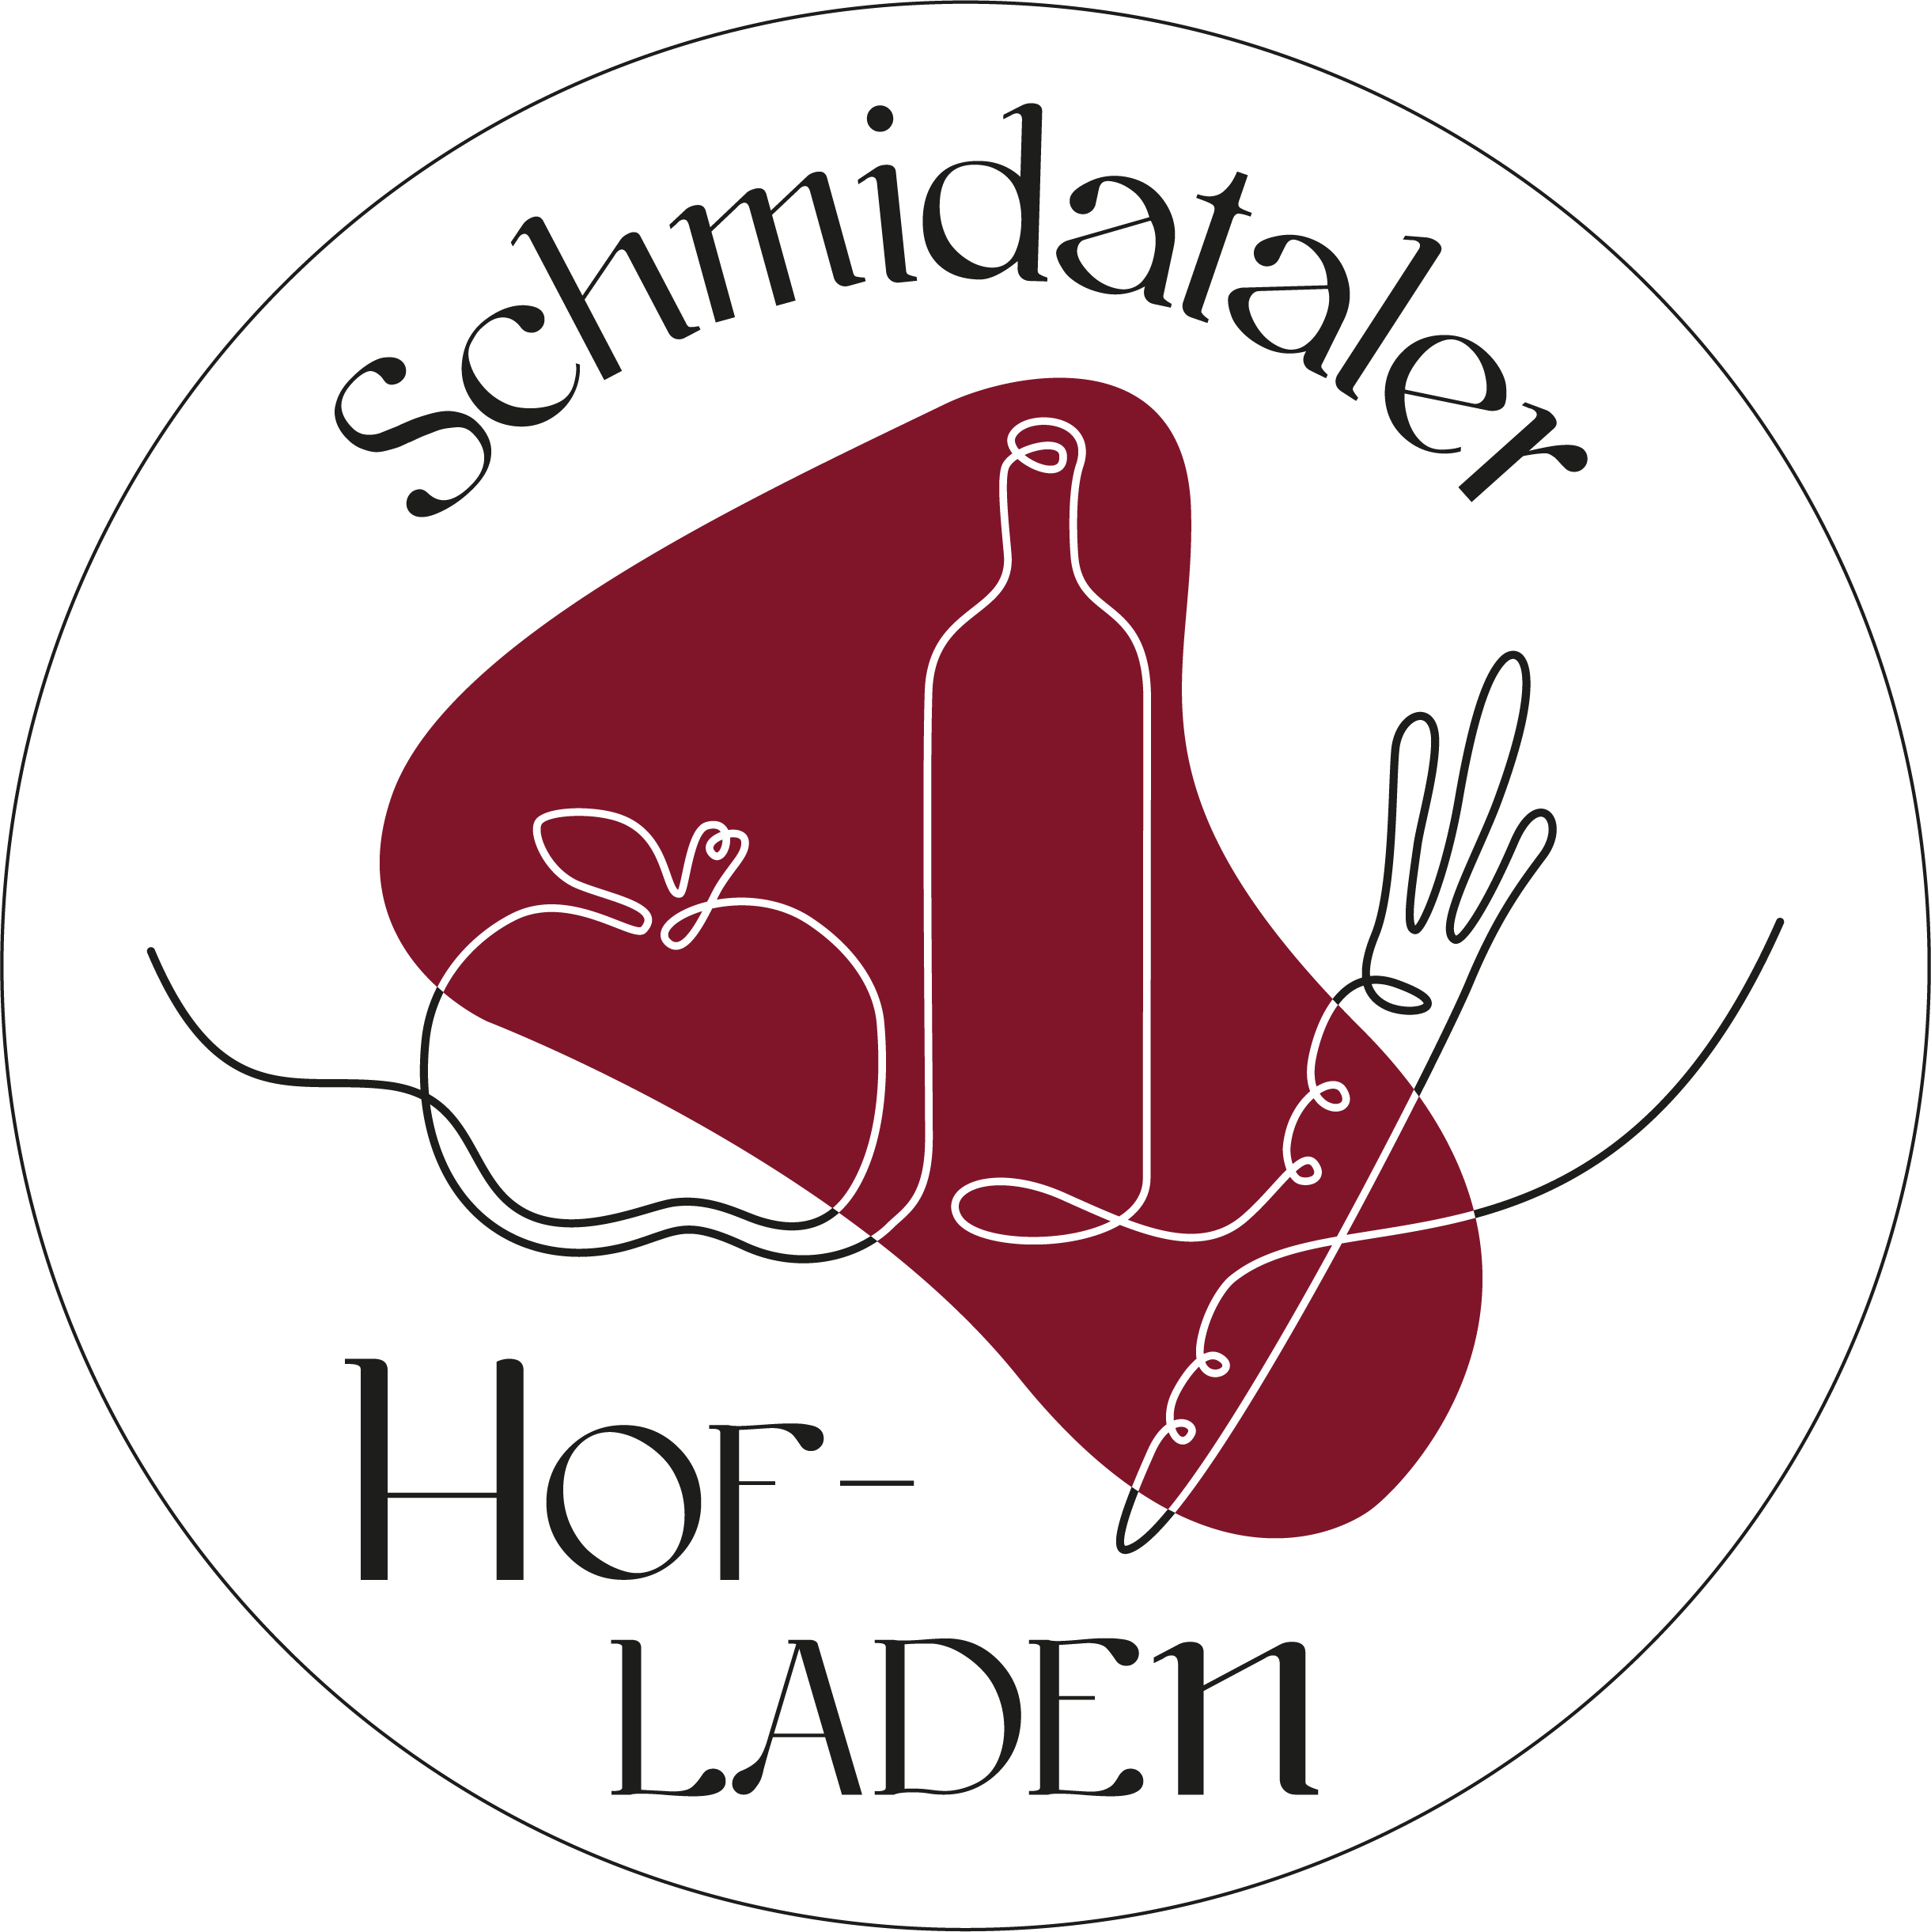 Schmidataler Hofladen Logo rund